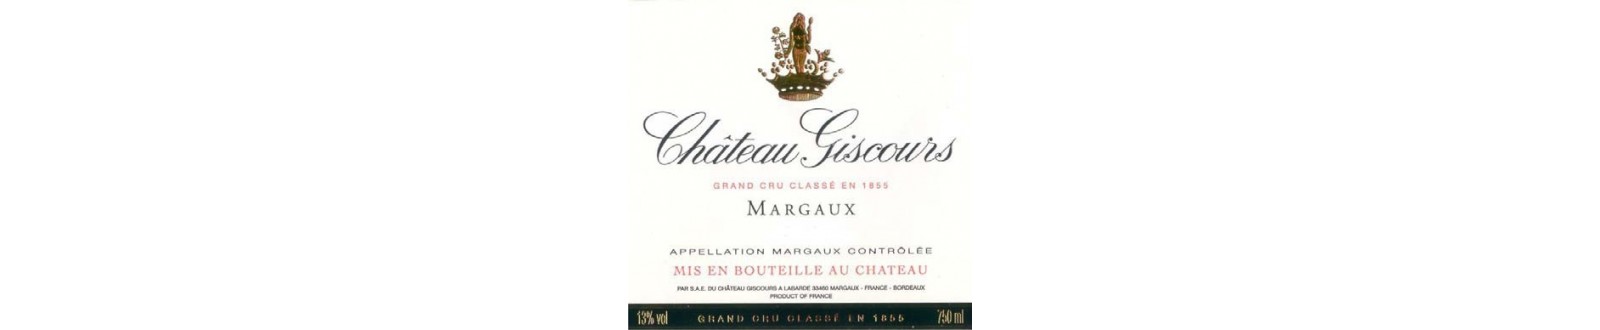 Vin(s) du Château Valandraud